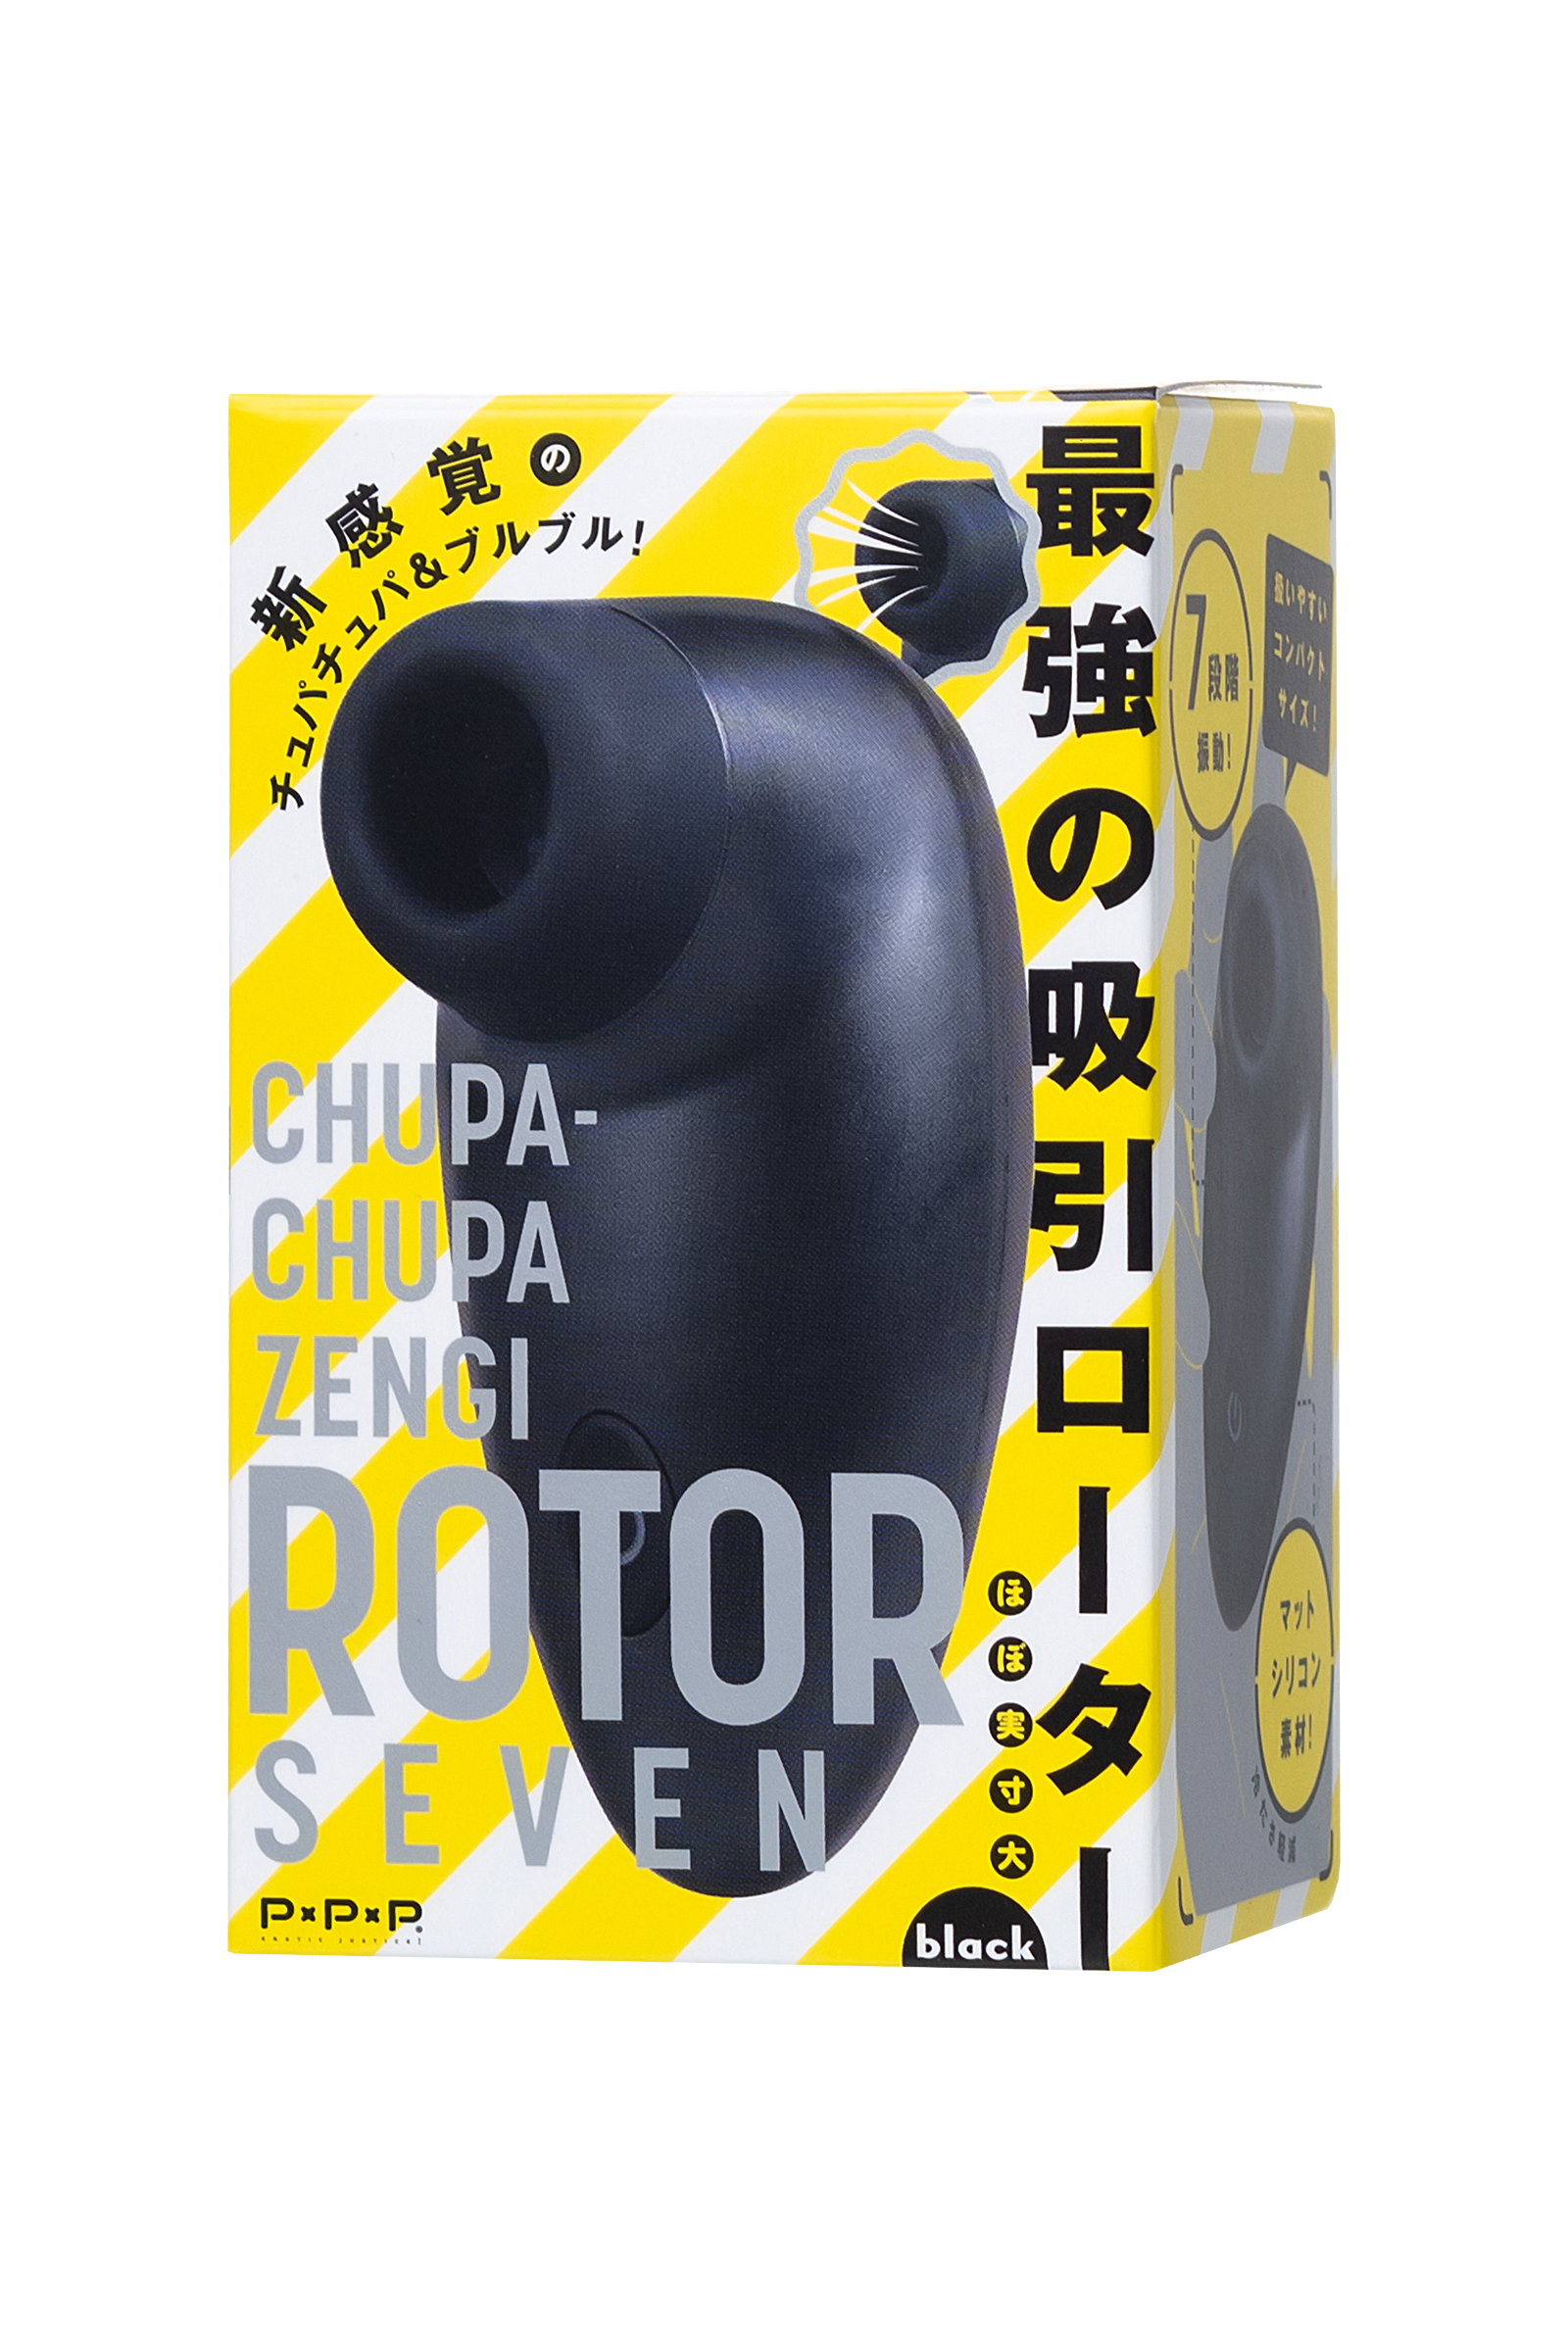 Вакуумный cтимулятор клитора PPP CHUPA-CHUPA ZENGI ROTOR, ABS-пластик, черный, 9 см. Фото N9